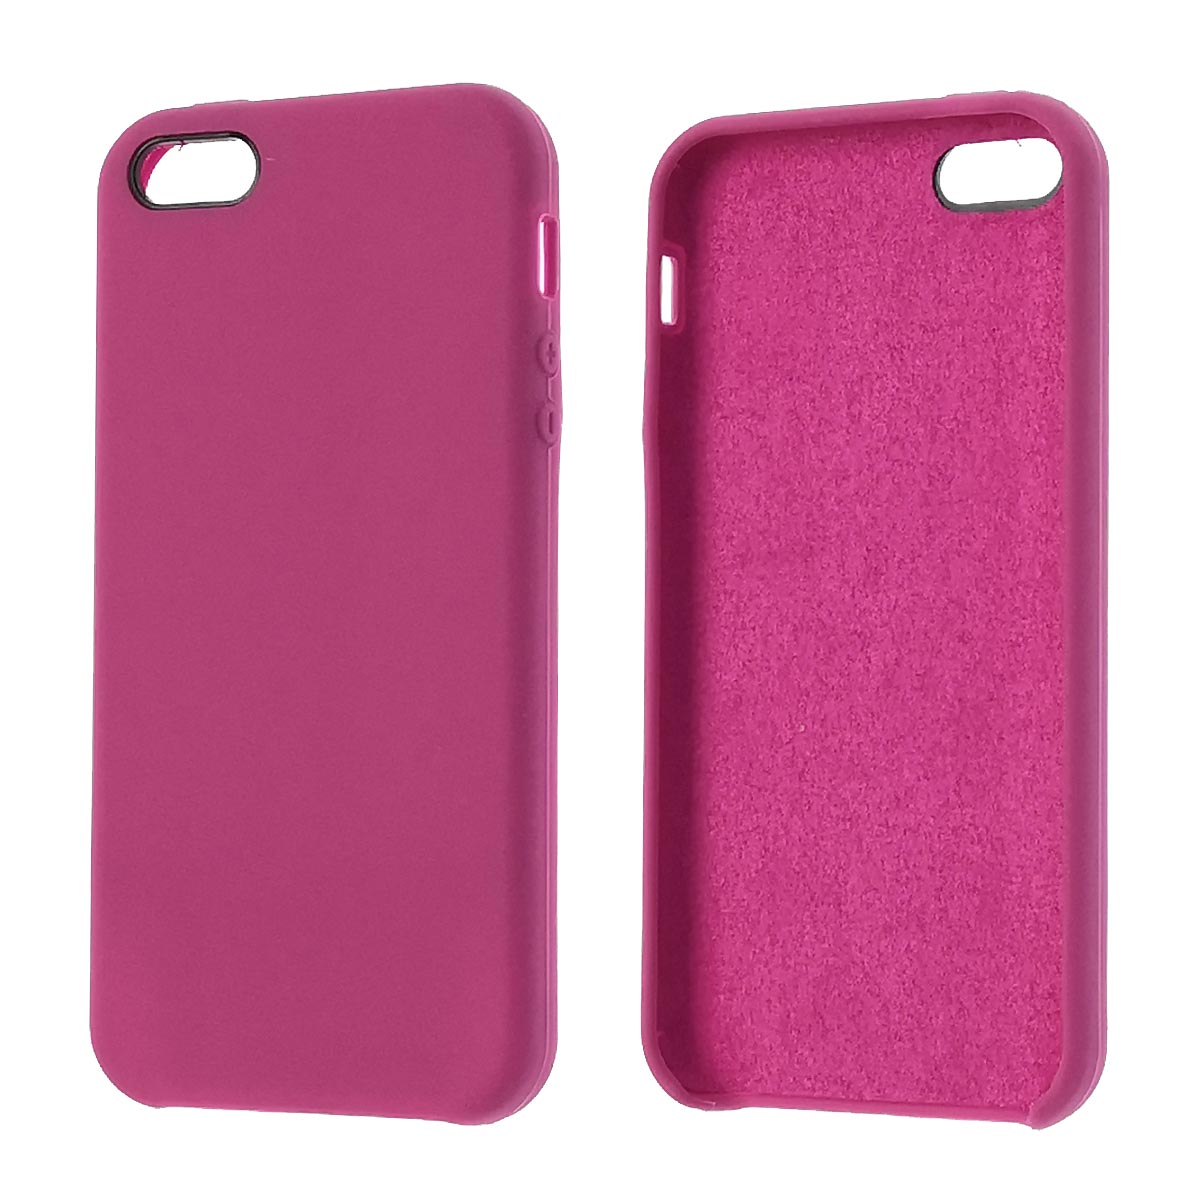 Чехол накладка Silicon Case для APPLE iPhone 5, 5G, 5S, SE, силикон, бархат, цвет малиновый